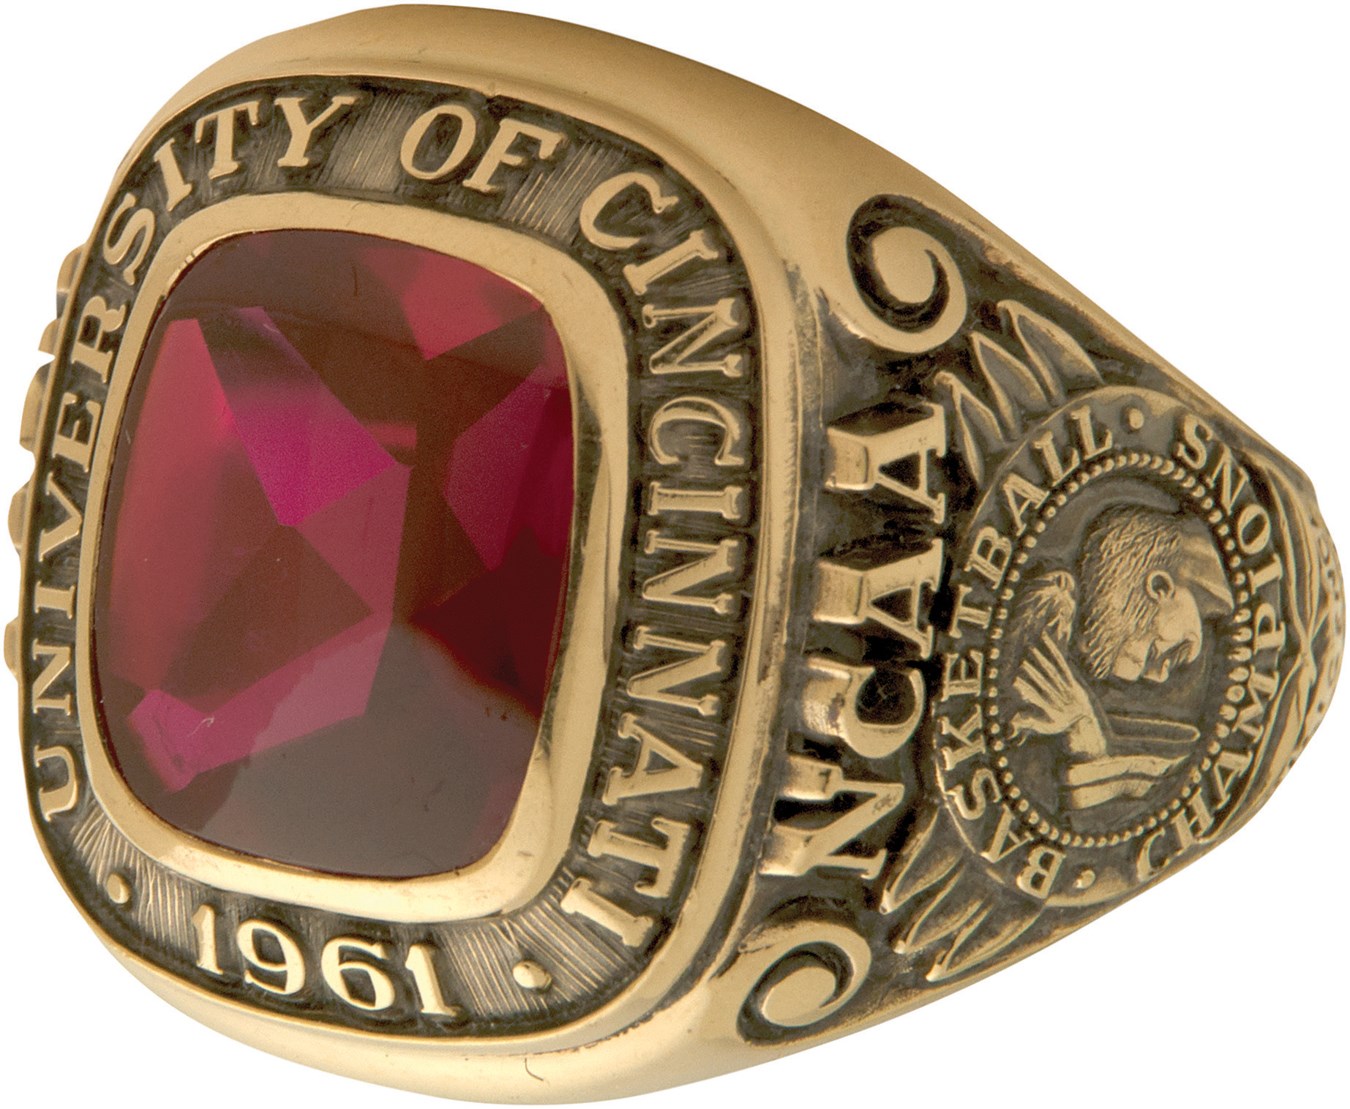 1961 Ed Jucker University of Cincinnati National Basketball Championship Ring